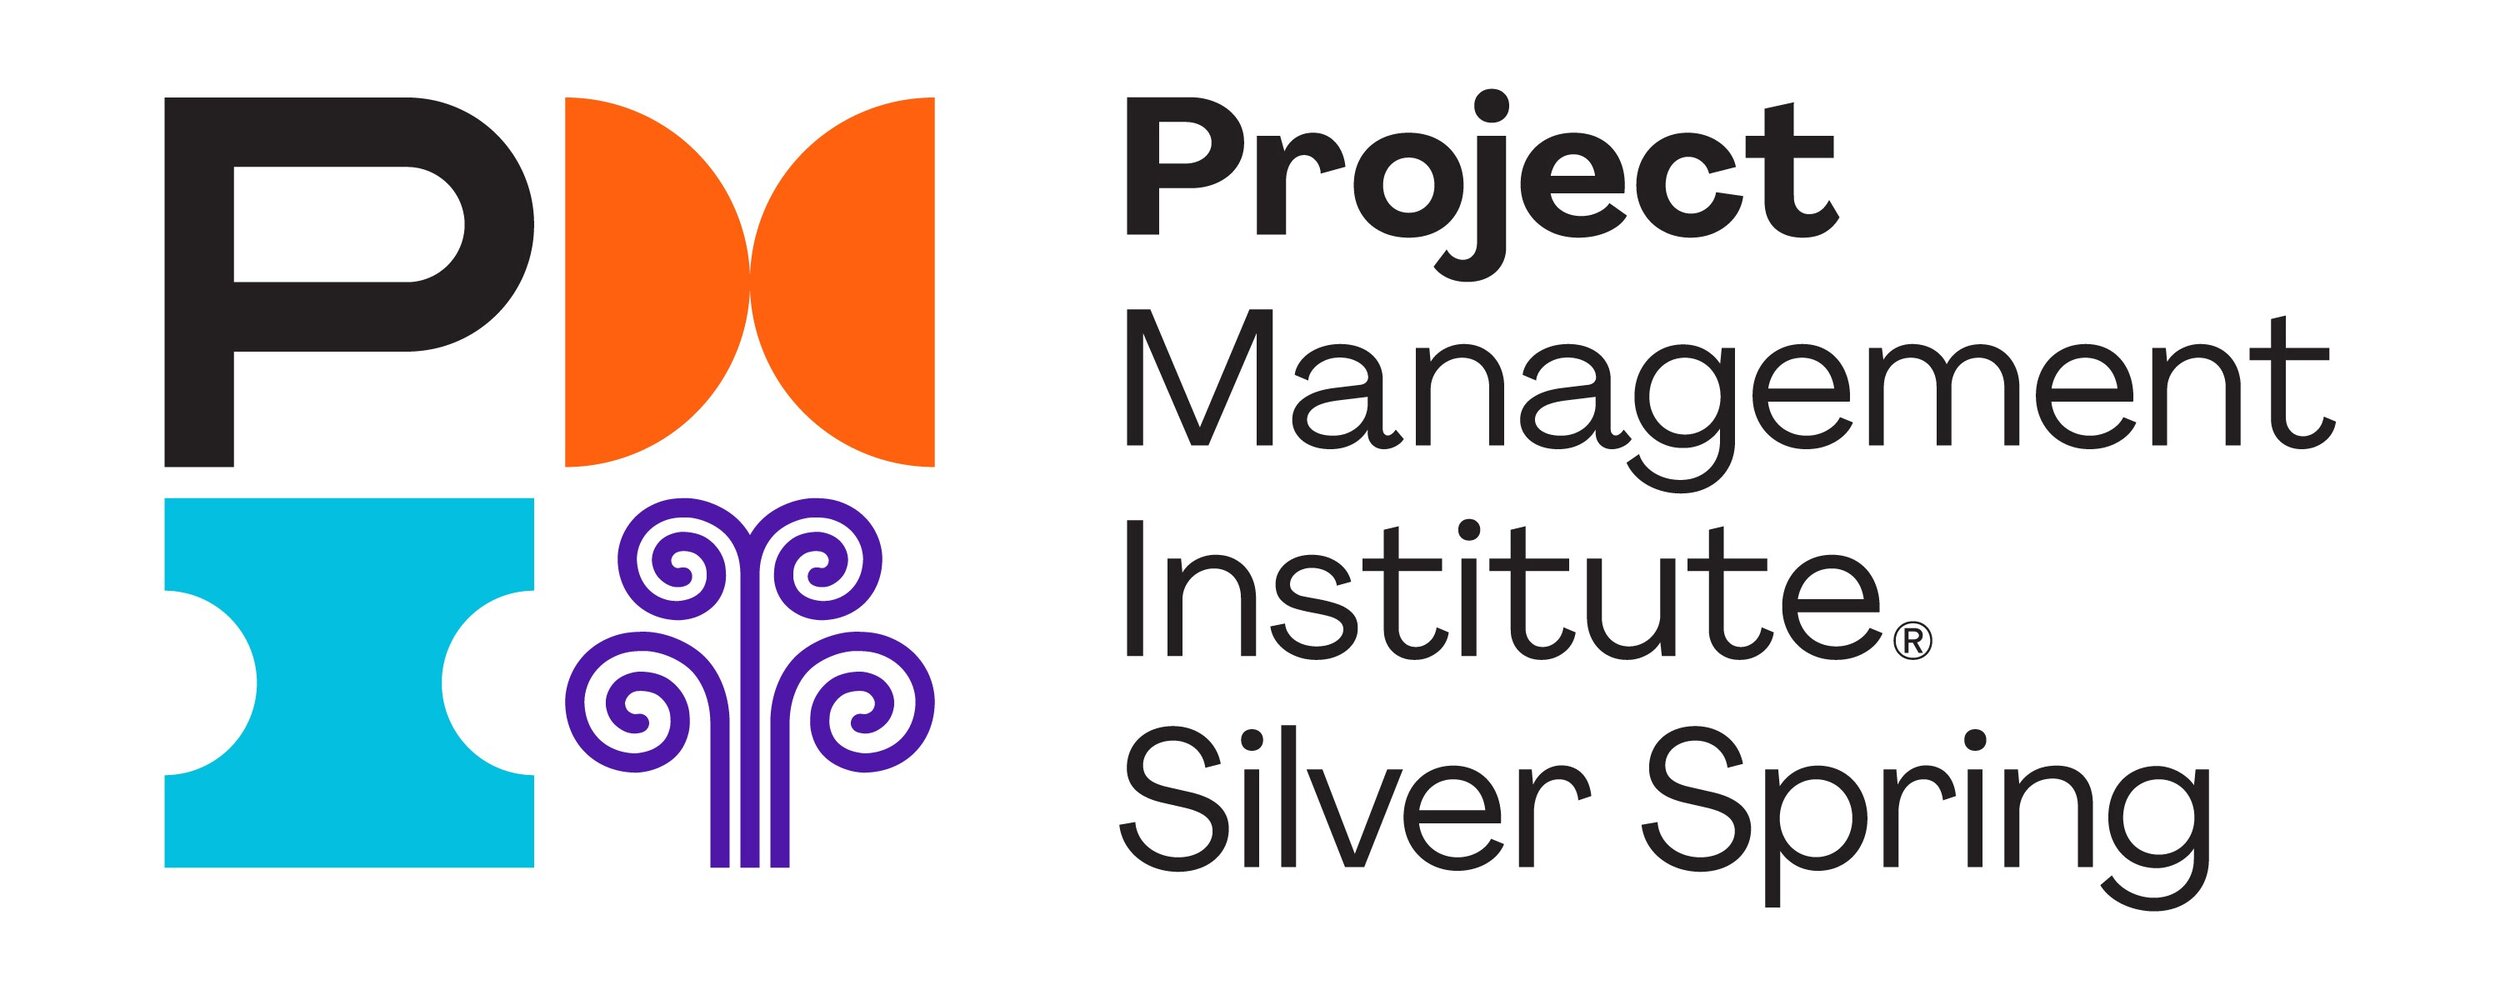 pmi_chp_logo_silver_spring_hrz_fc_rgb_REV.JPG